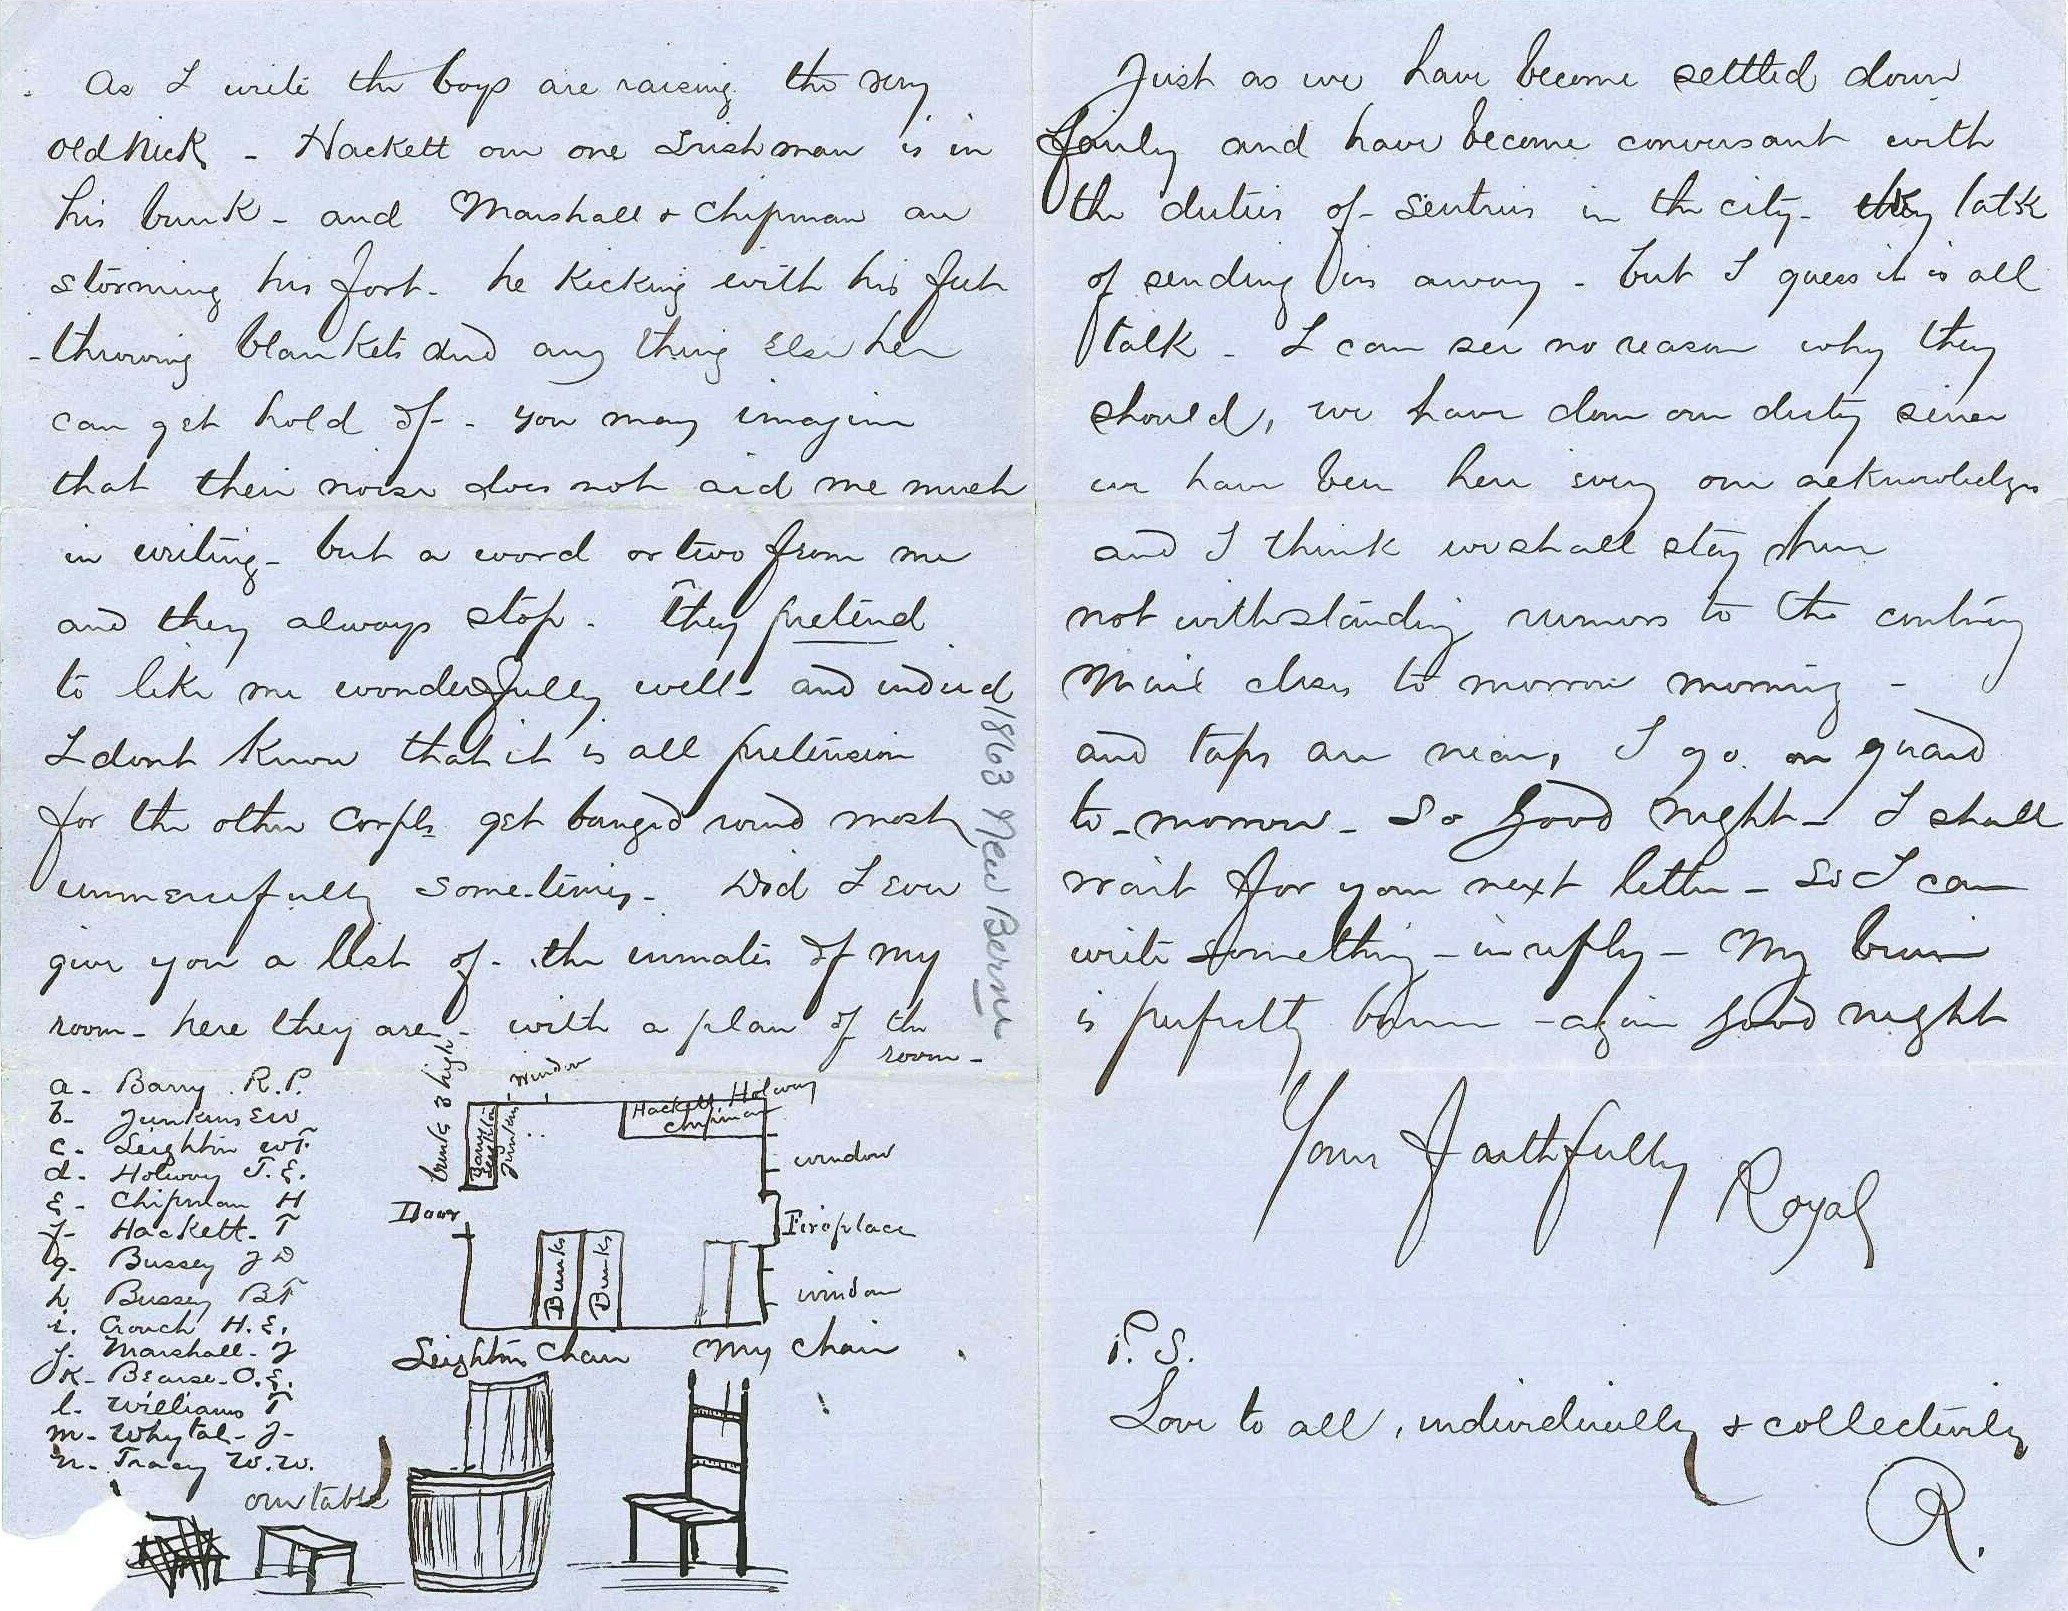 Letter from Major Royal Pierce Barry